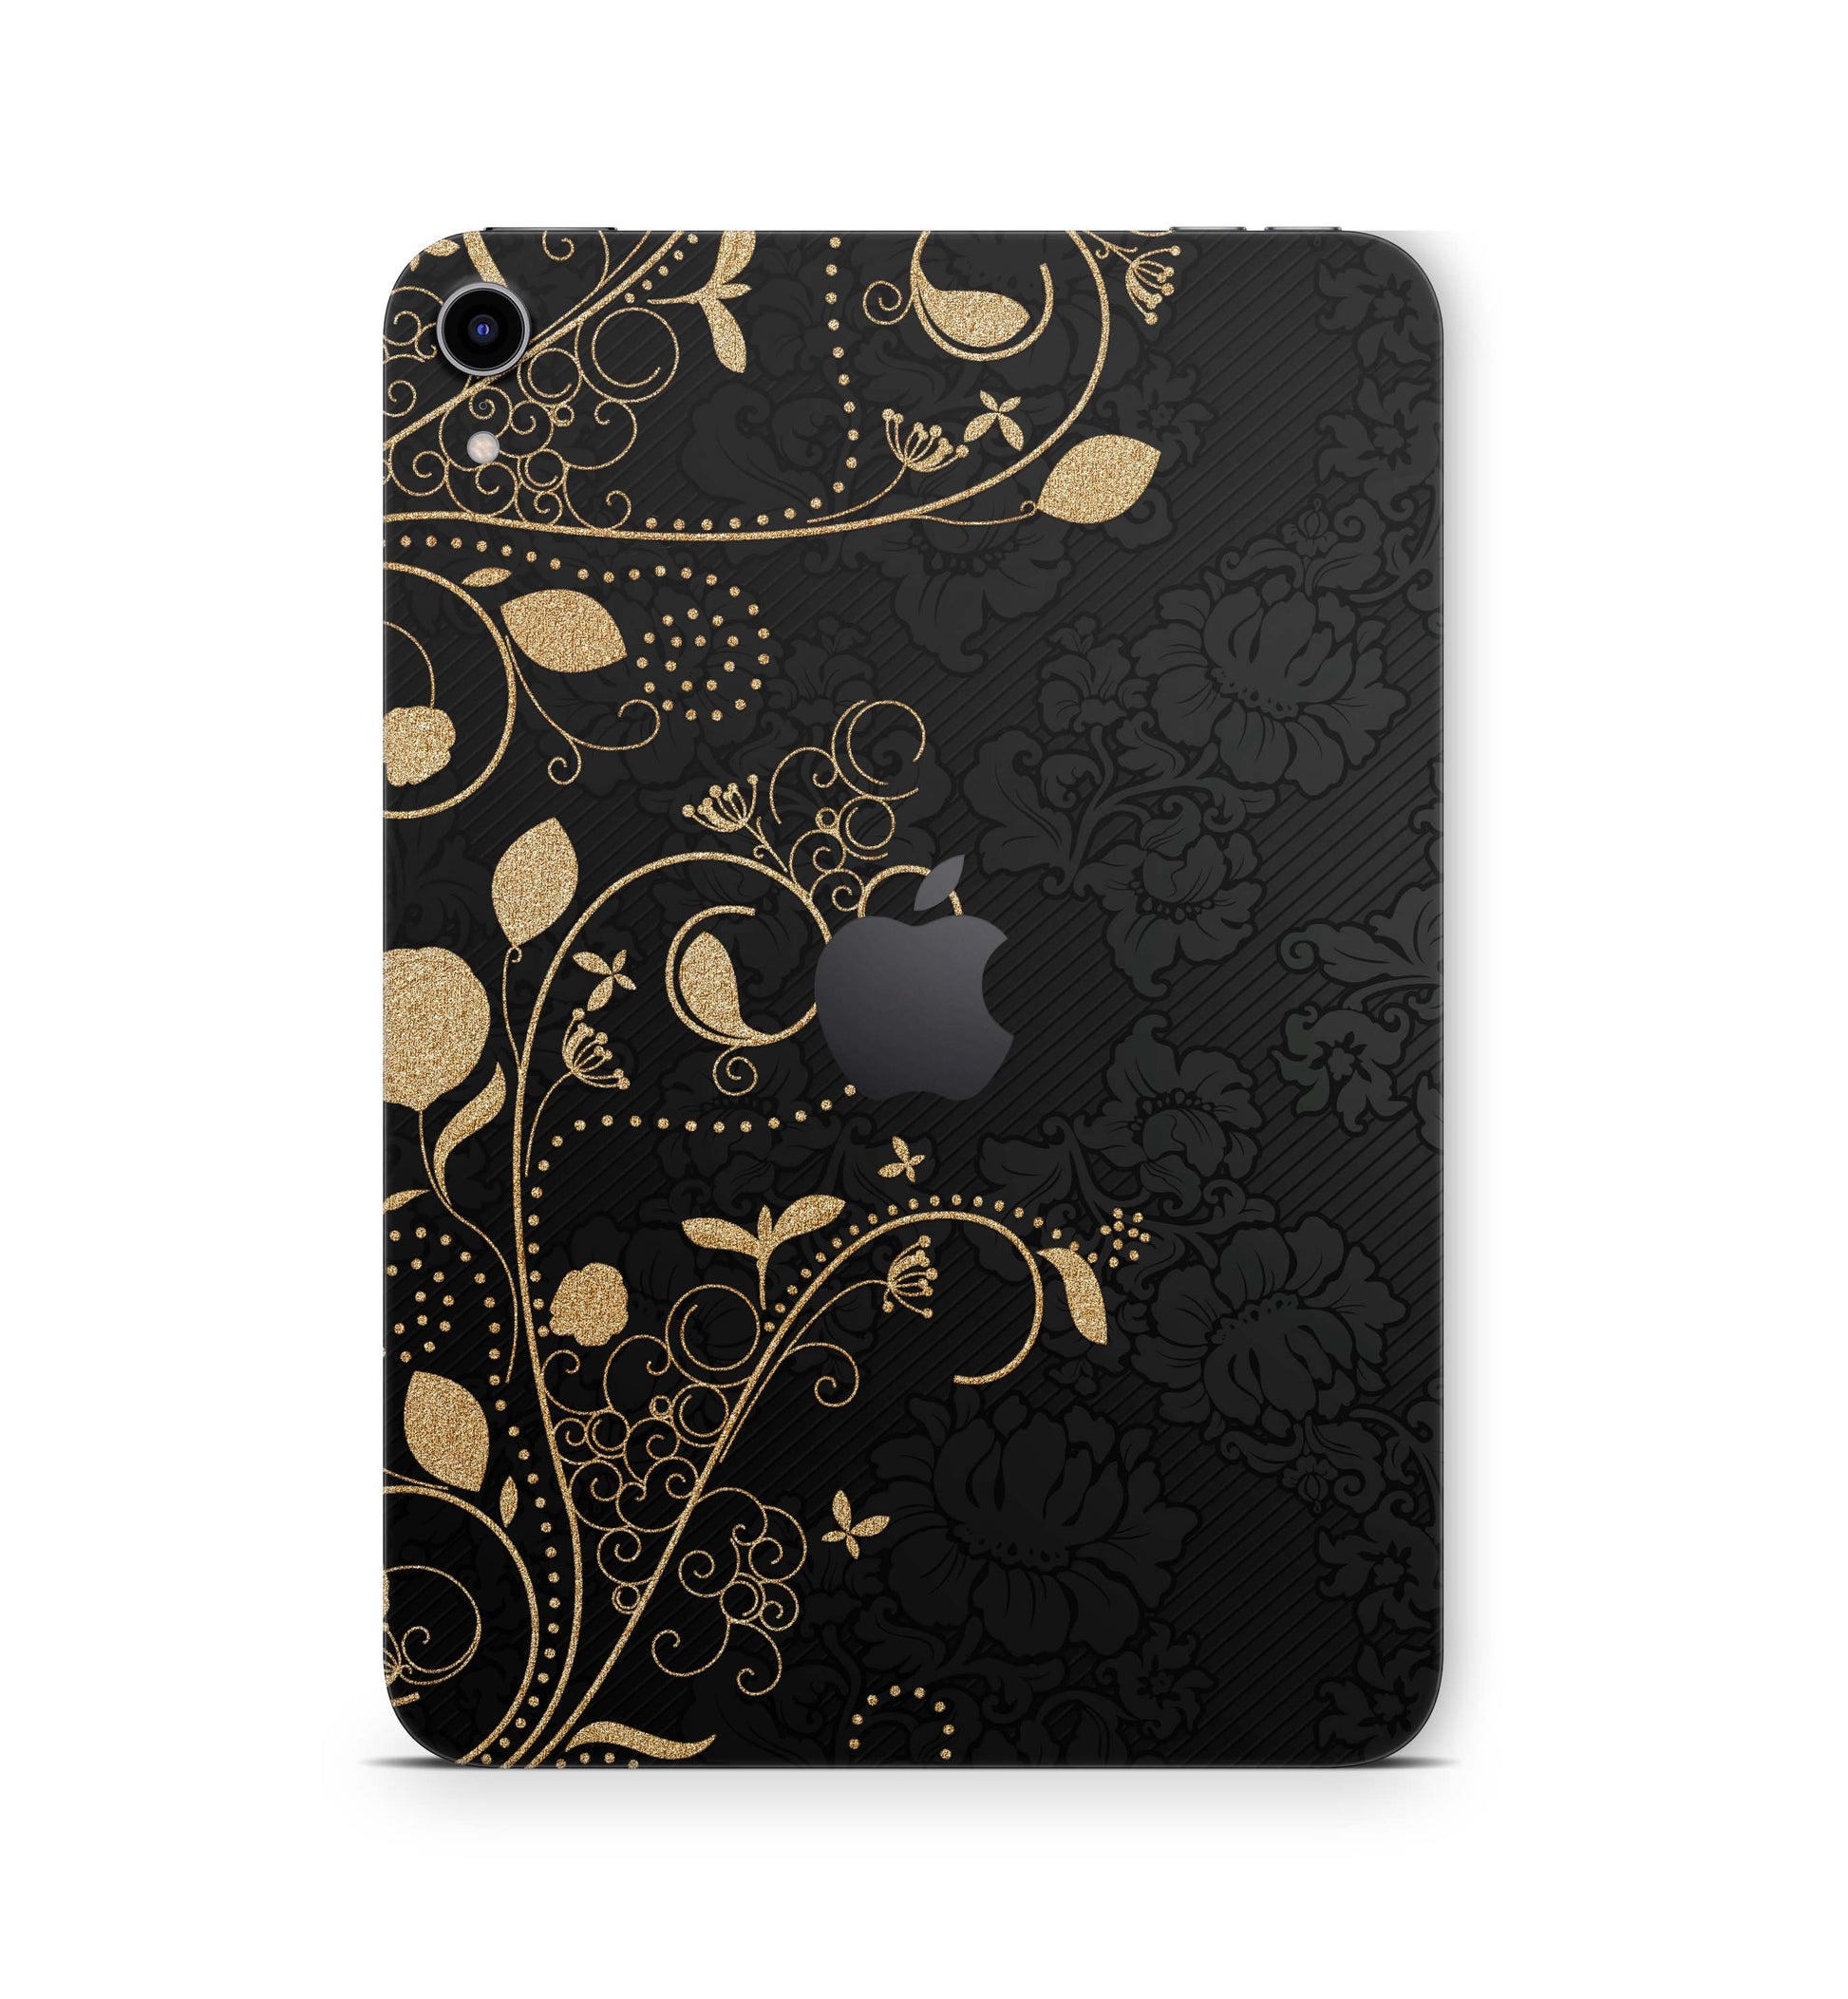 Apple iPad Skin Design Cover Folie Vinyl Skins & Wraps für alle iPad Modelle Aufkleber Skins4u Darkmoon  